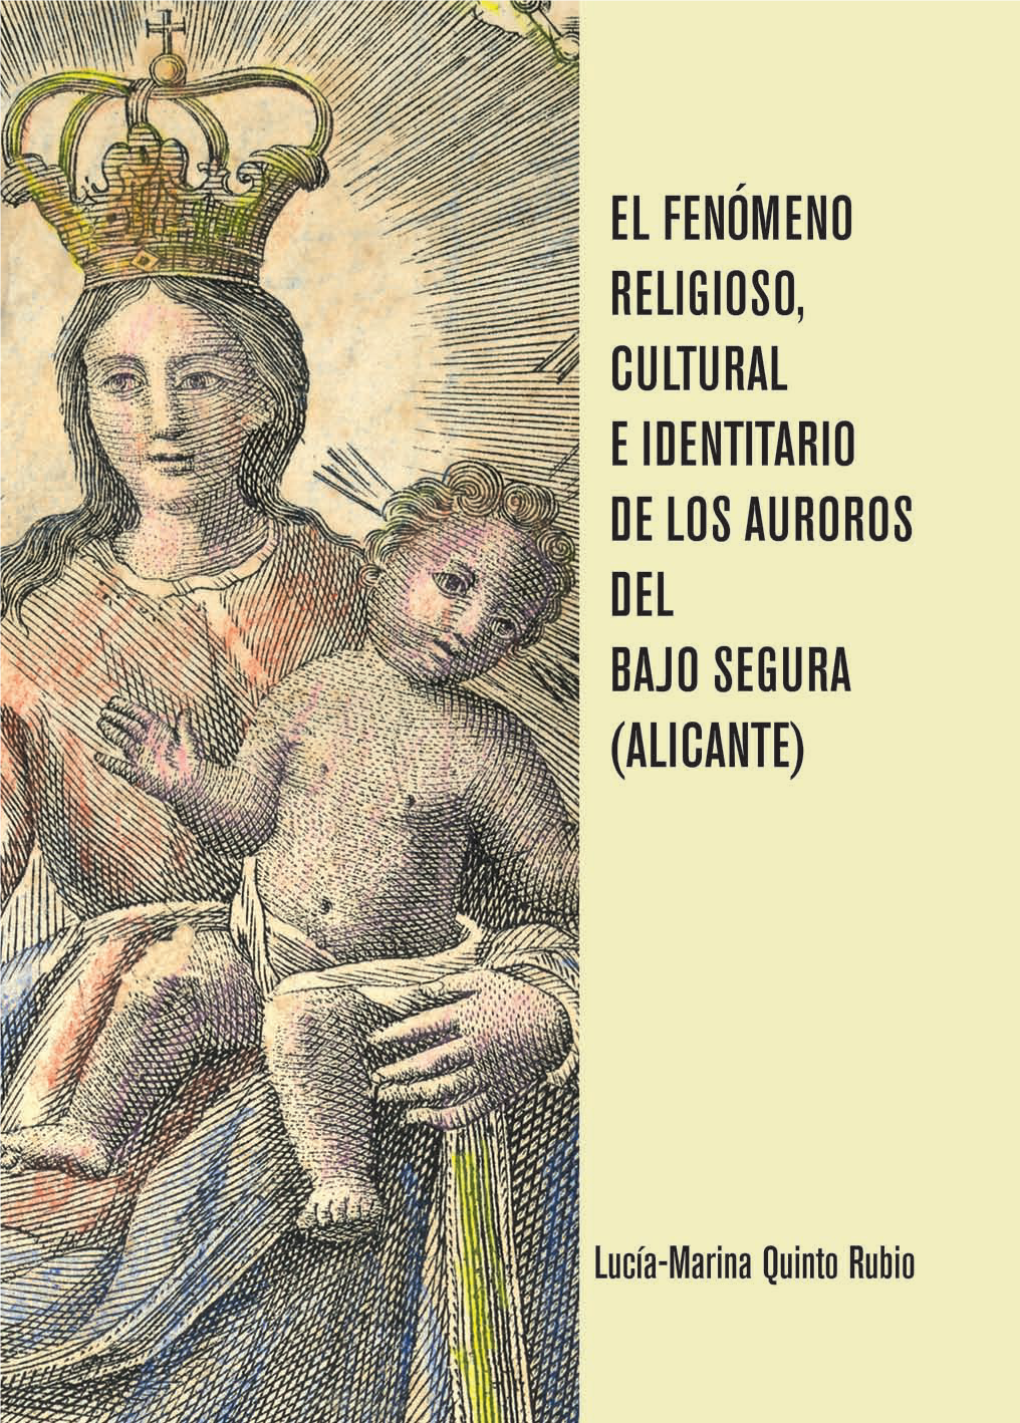 Libro Auroros Albatera 2018.Indd